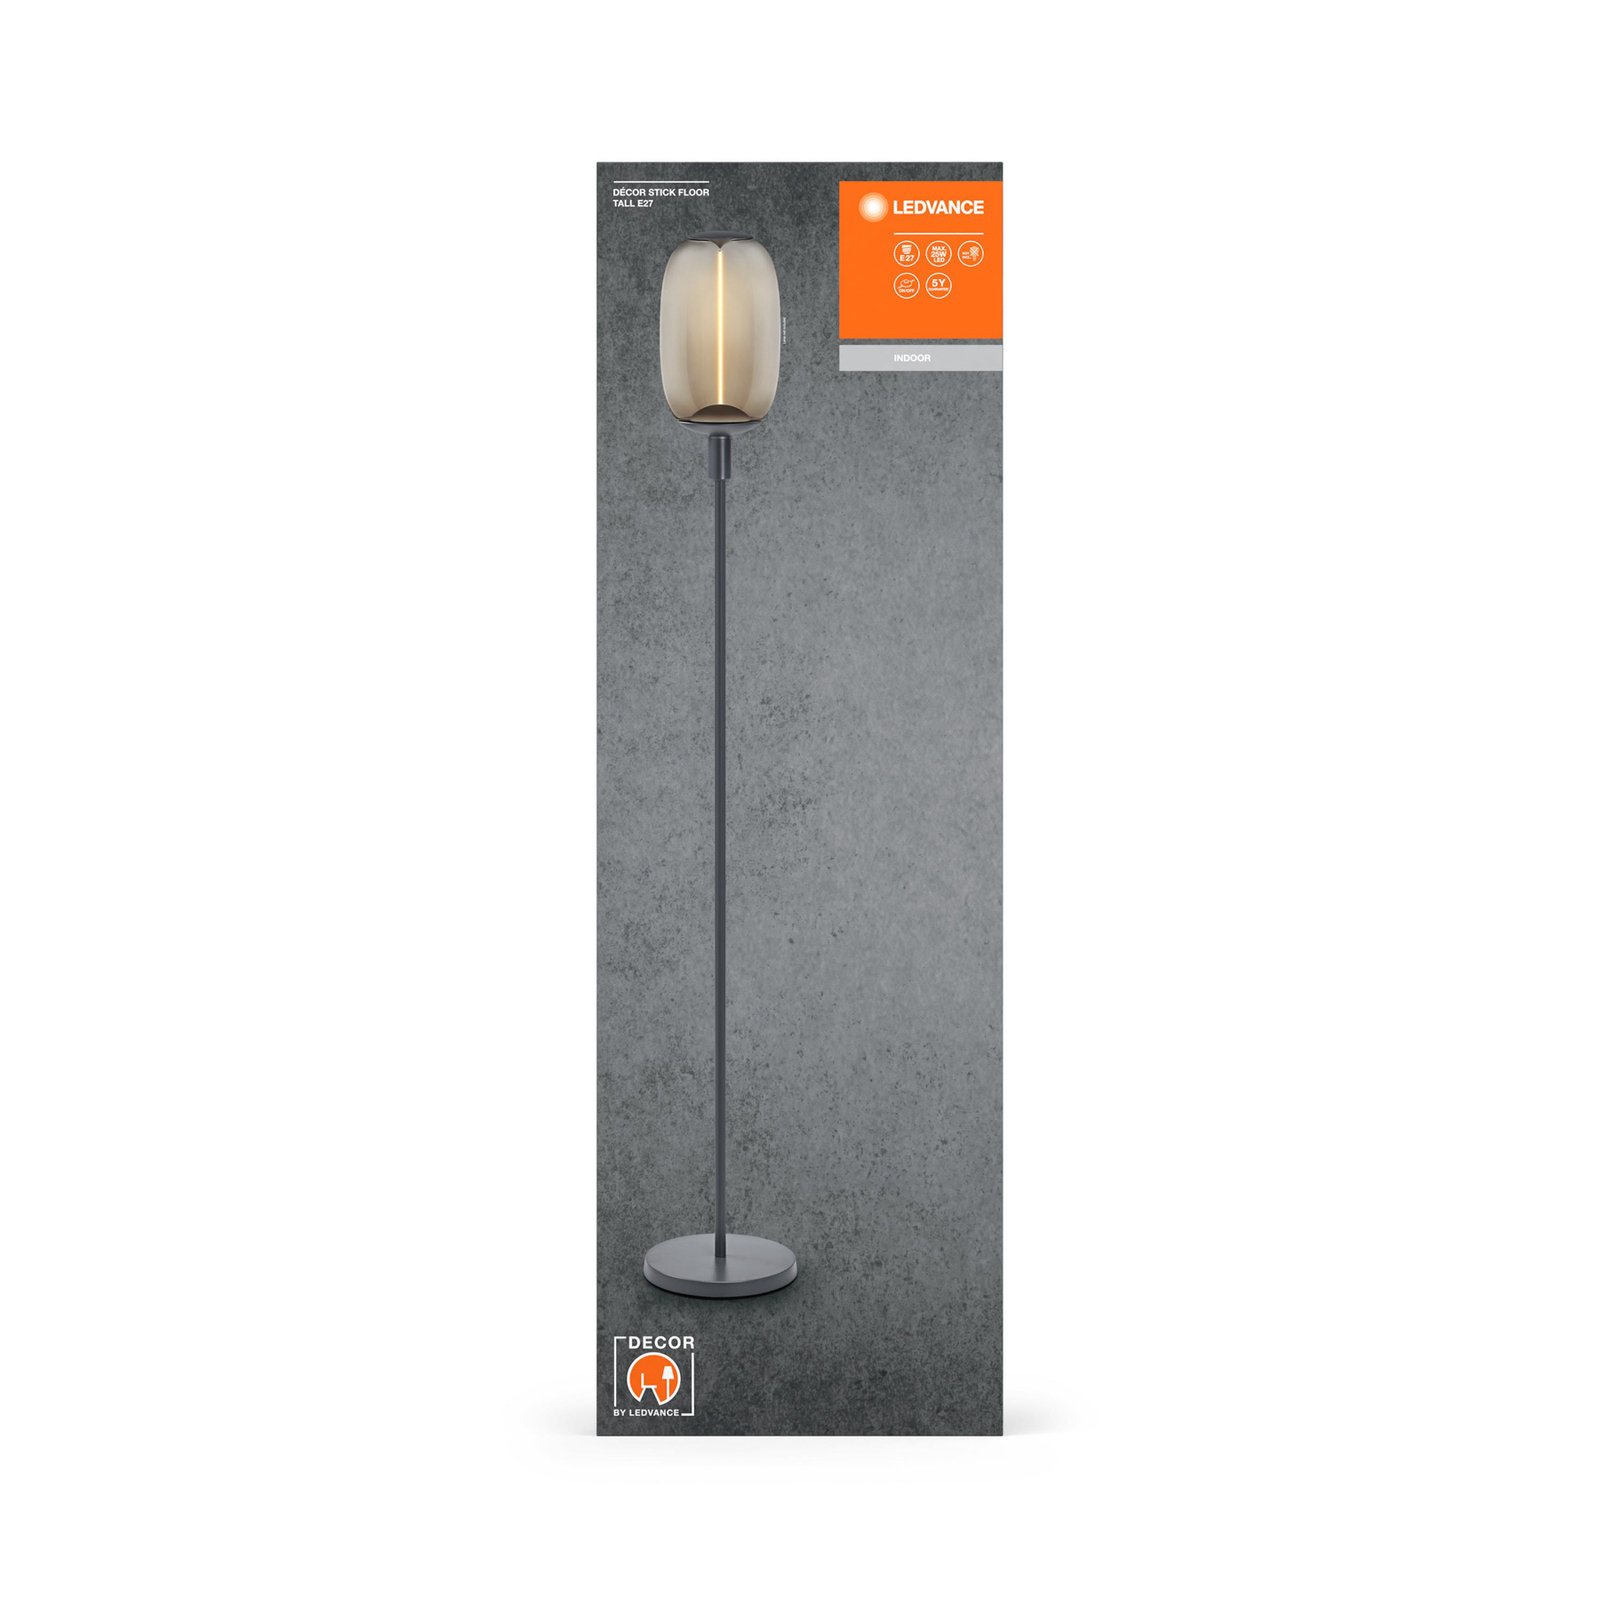 LEDVANCE Decor Stick floor lamp E27, height 146cm, dark grey